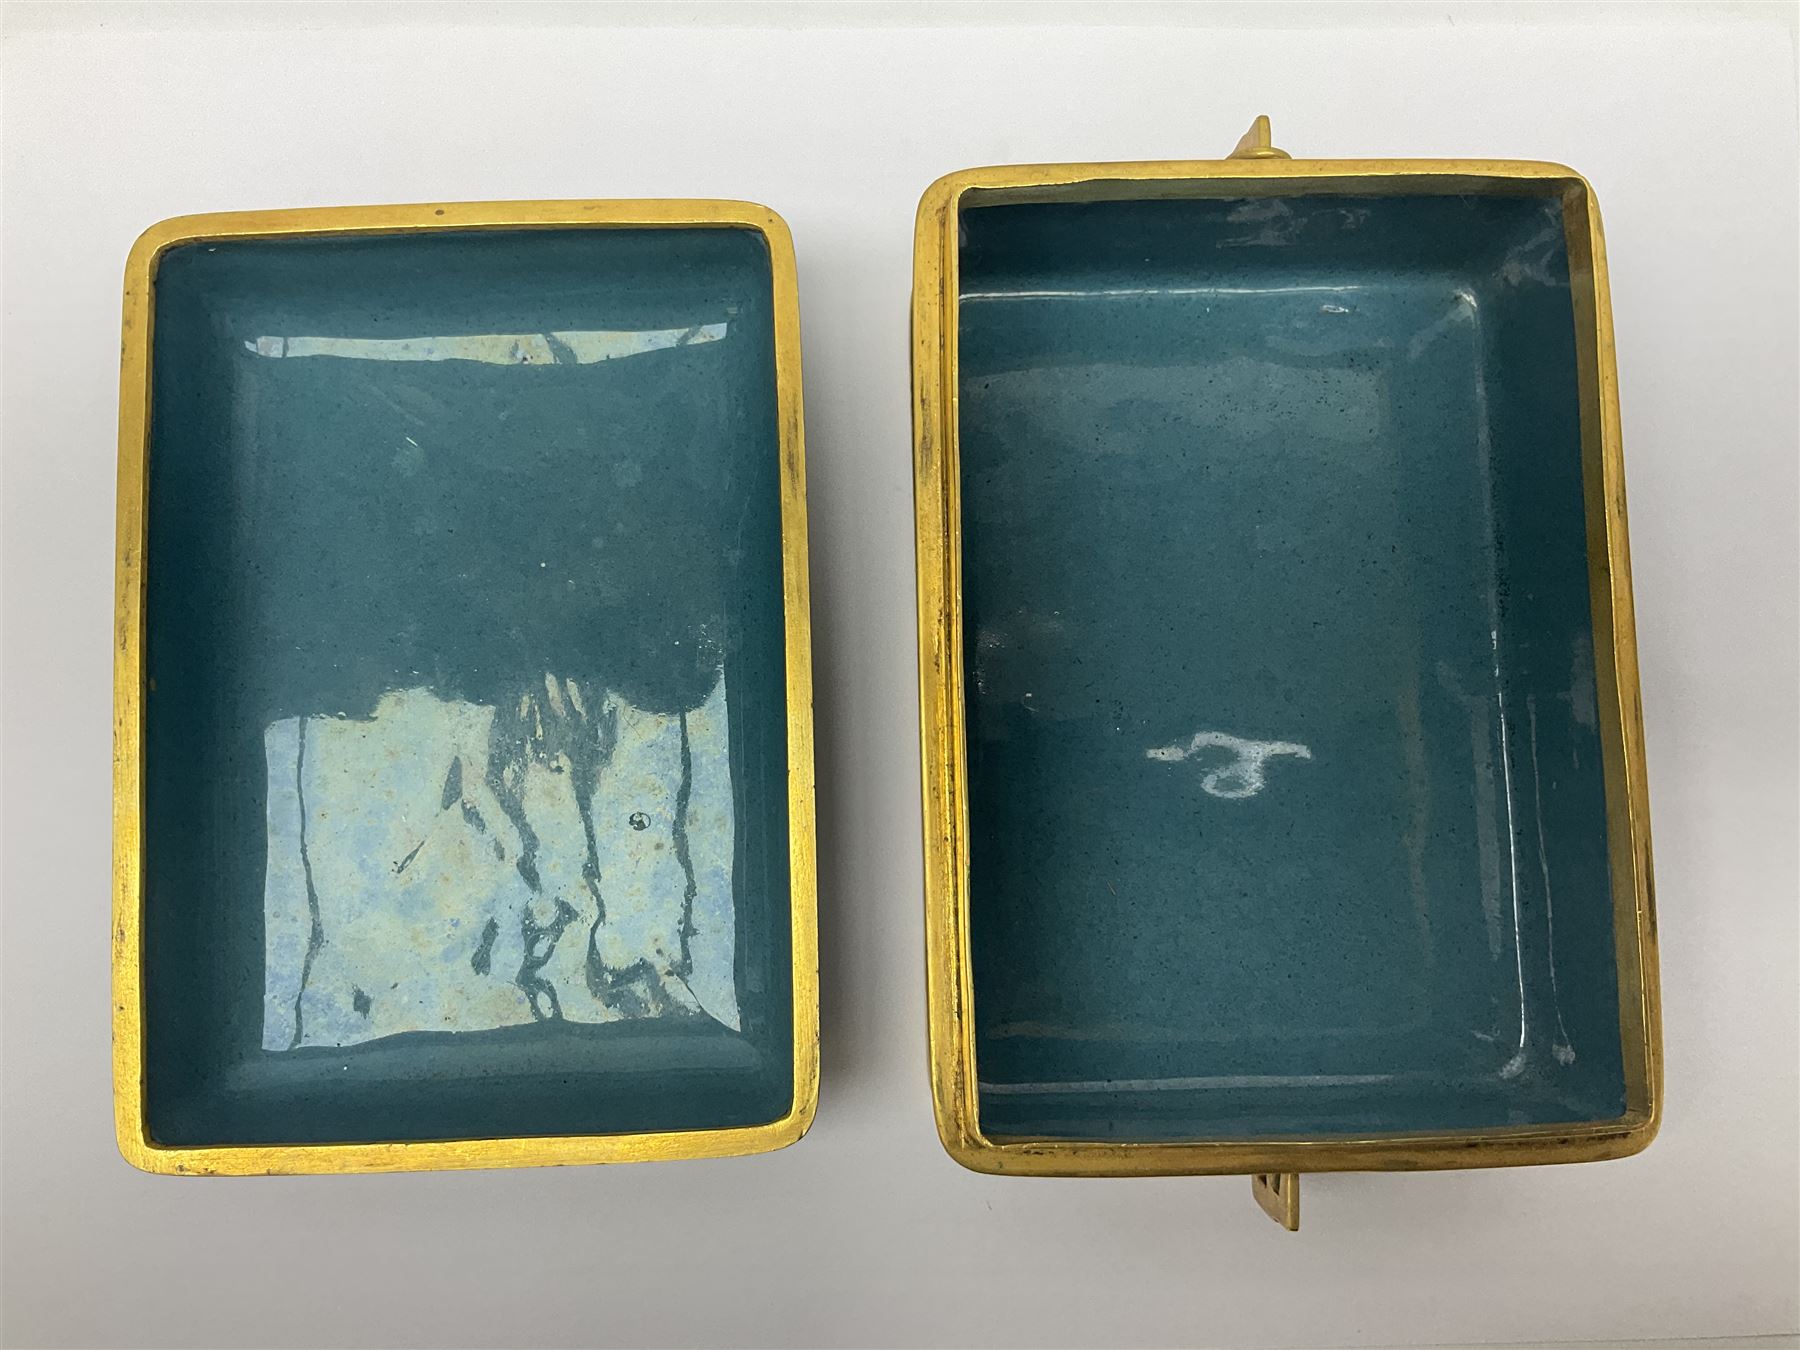 20th century Chinese cloisonne enamel smoking set - Image 15 of 28